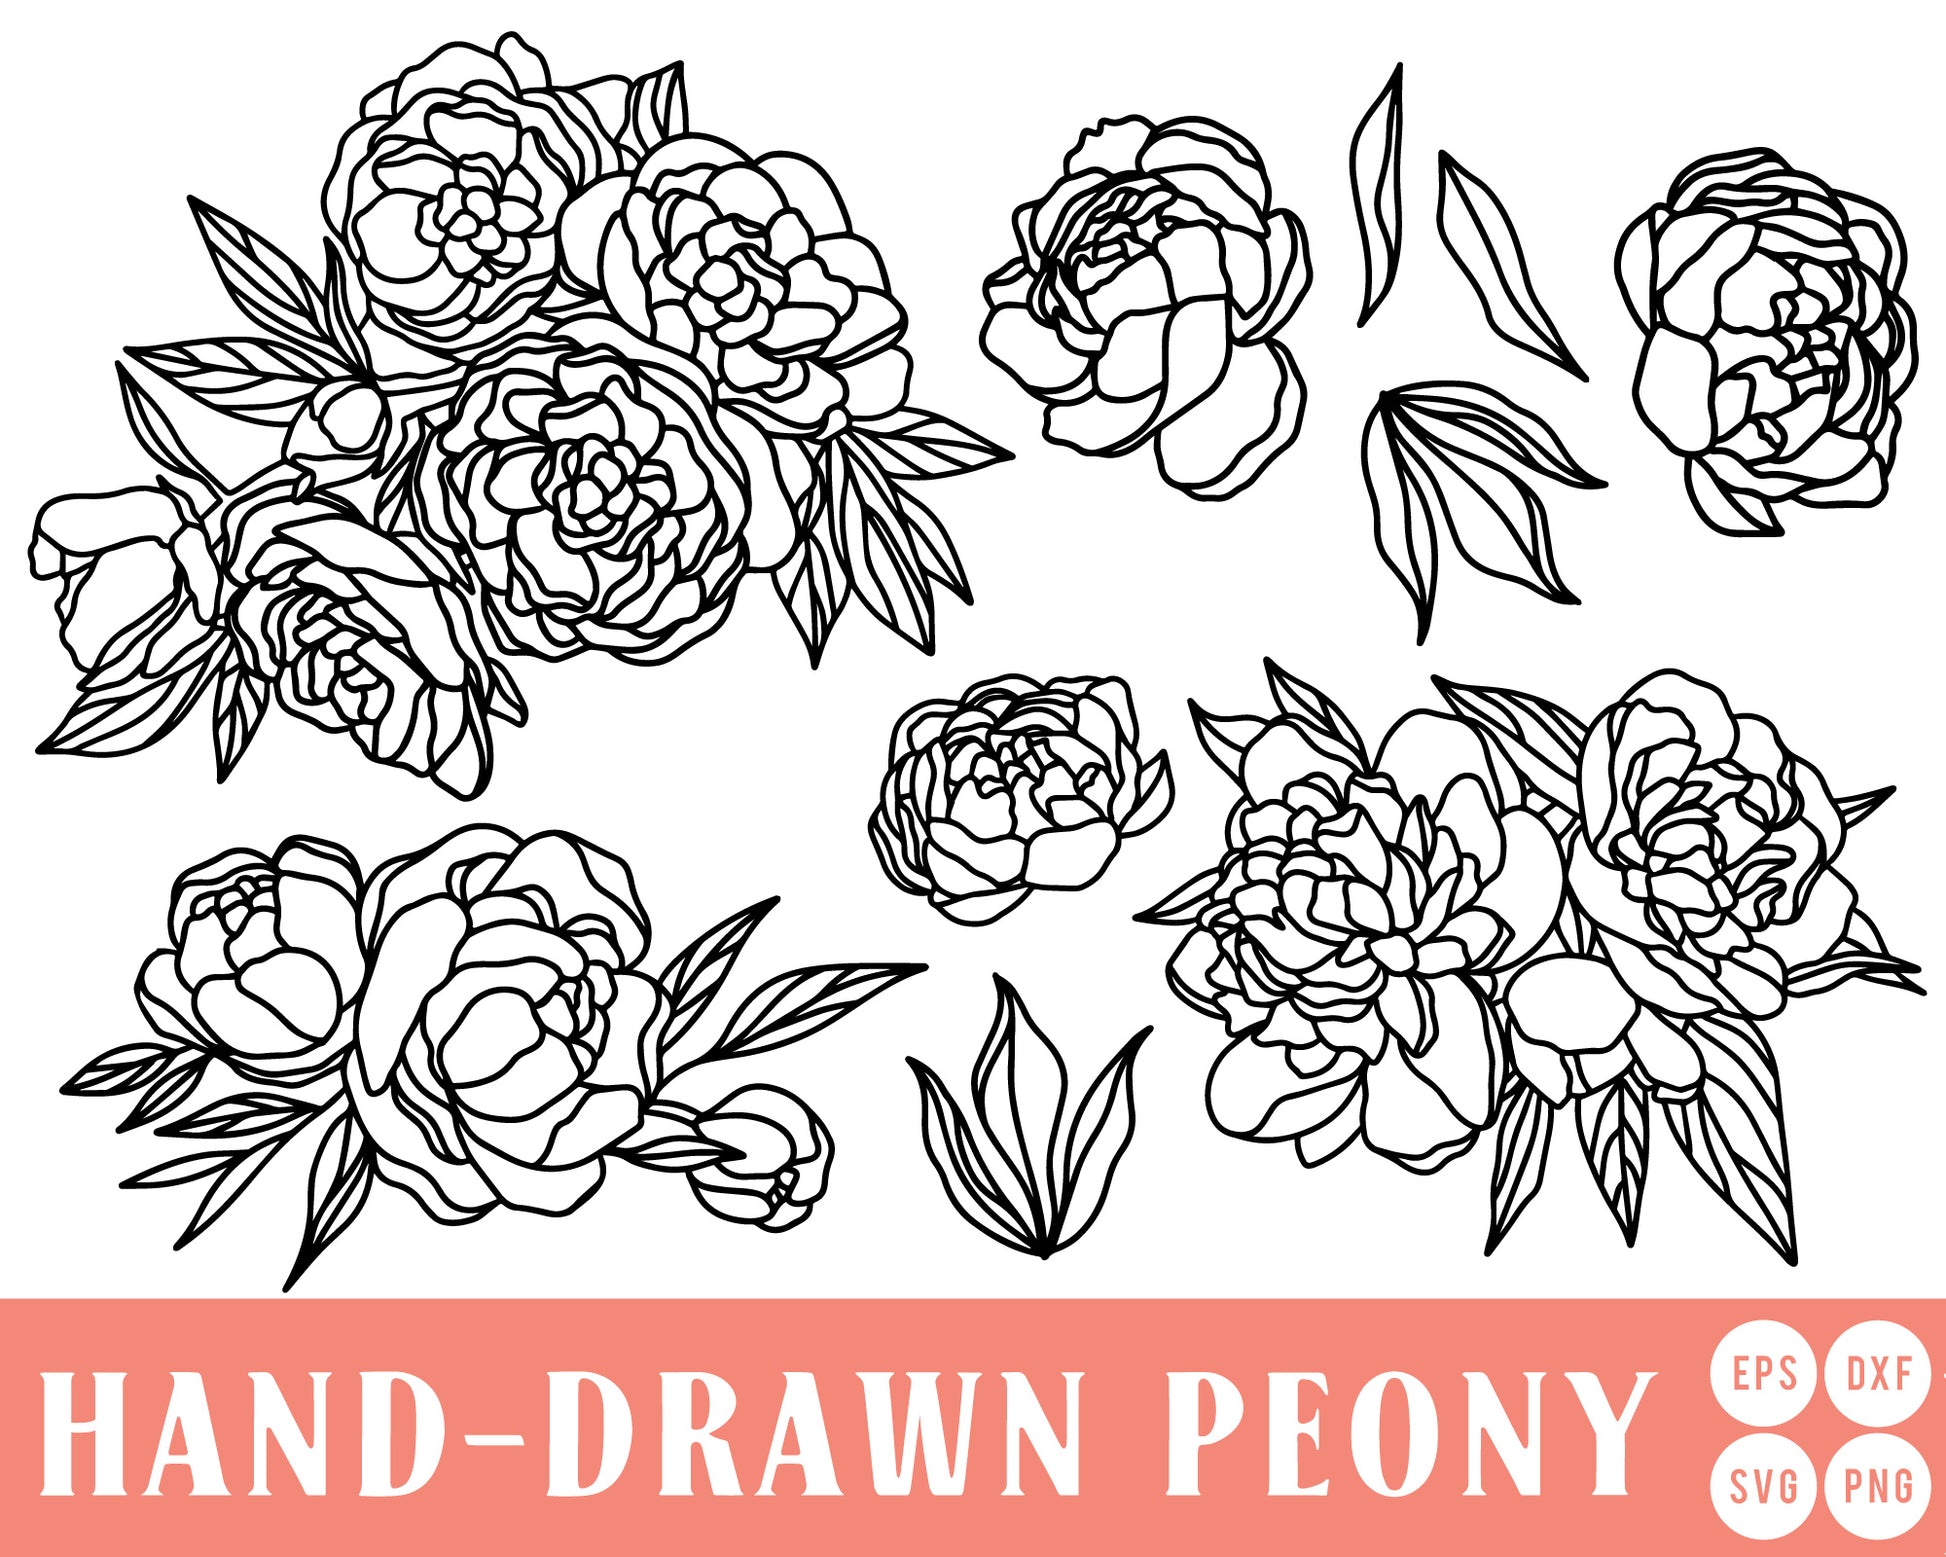 Hand-drawn Peony SVG Mini Bundle Cut File for Cricut, Cameo Silhouette | Floral, Spring Cut File